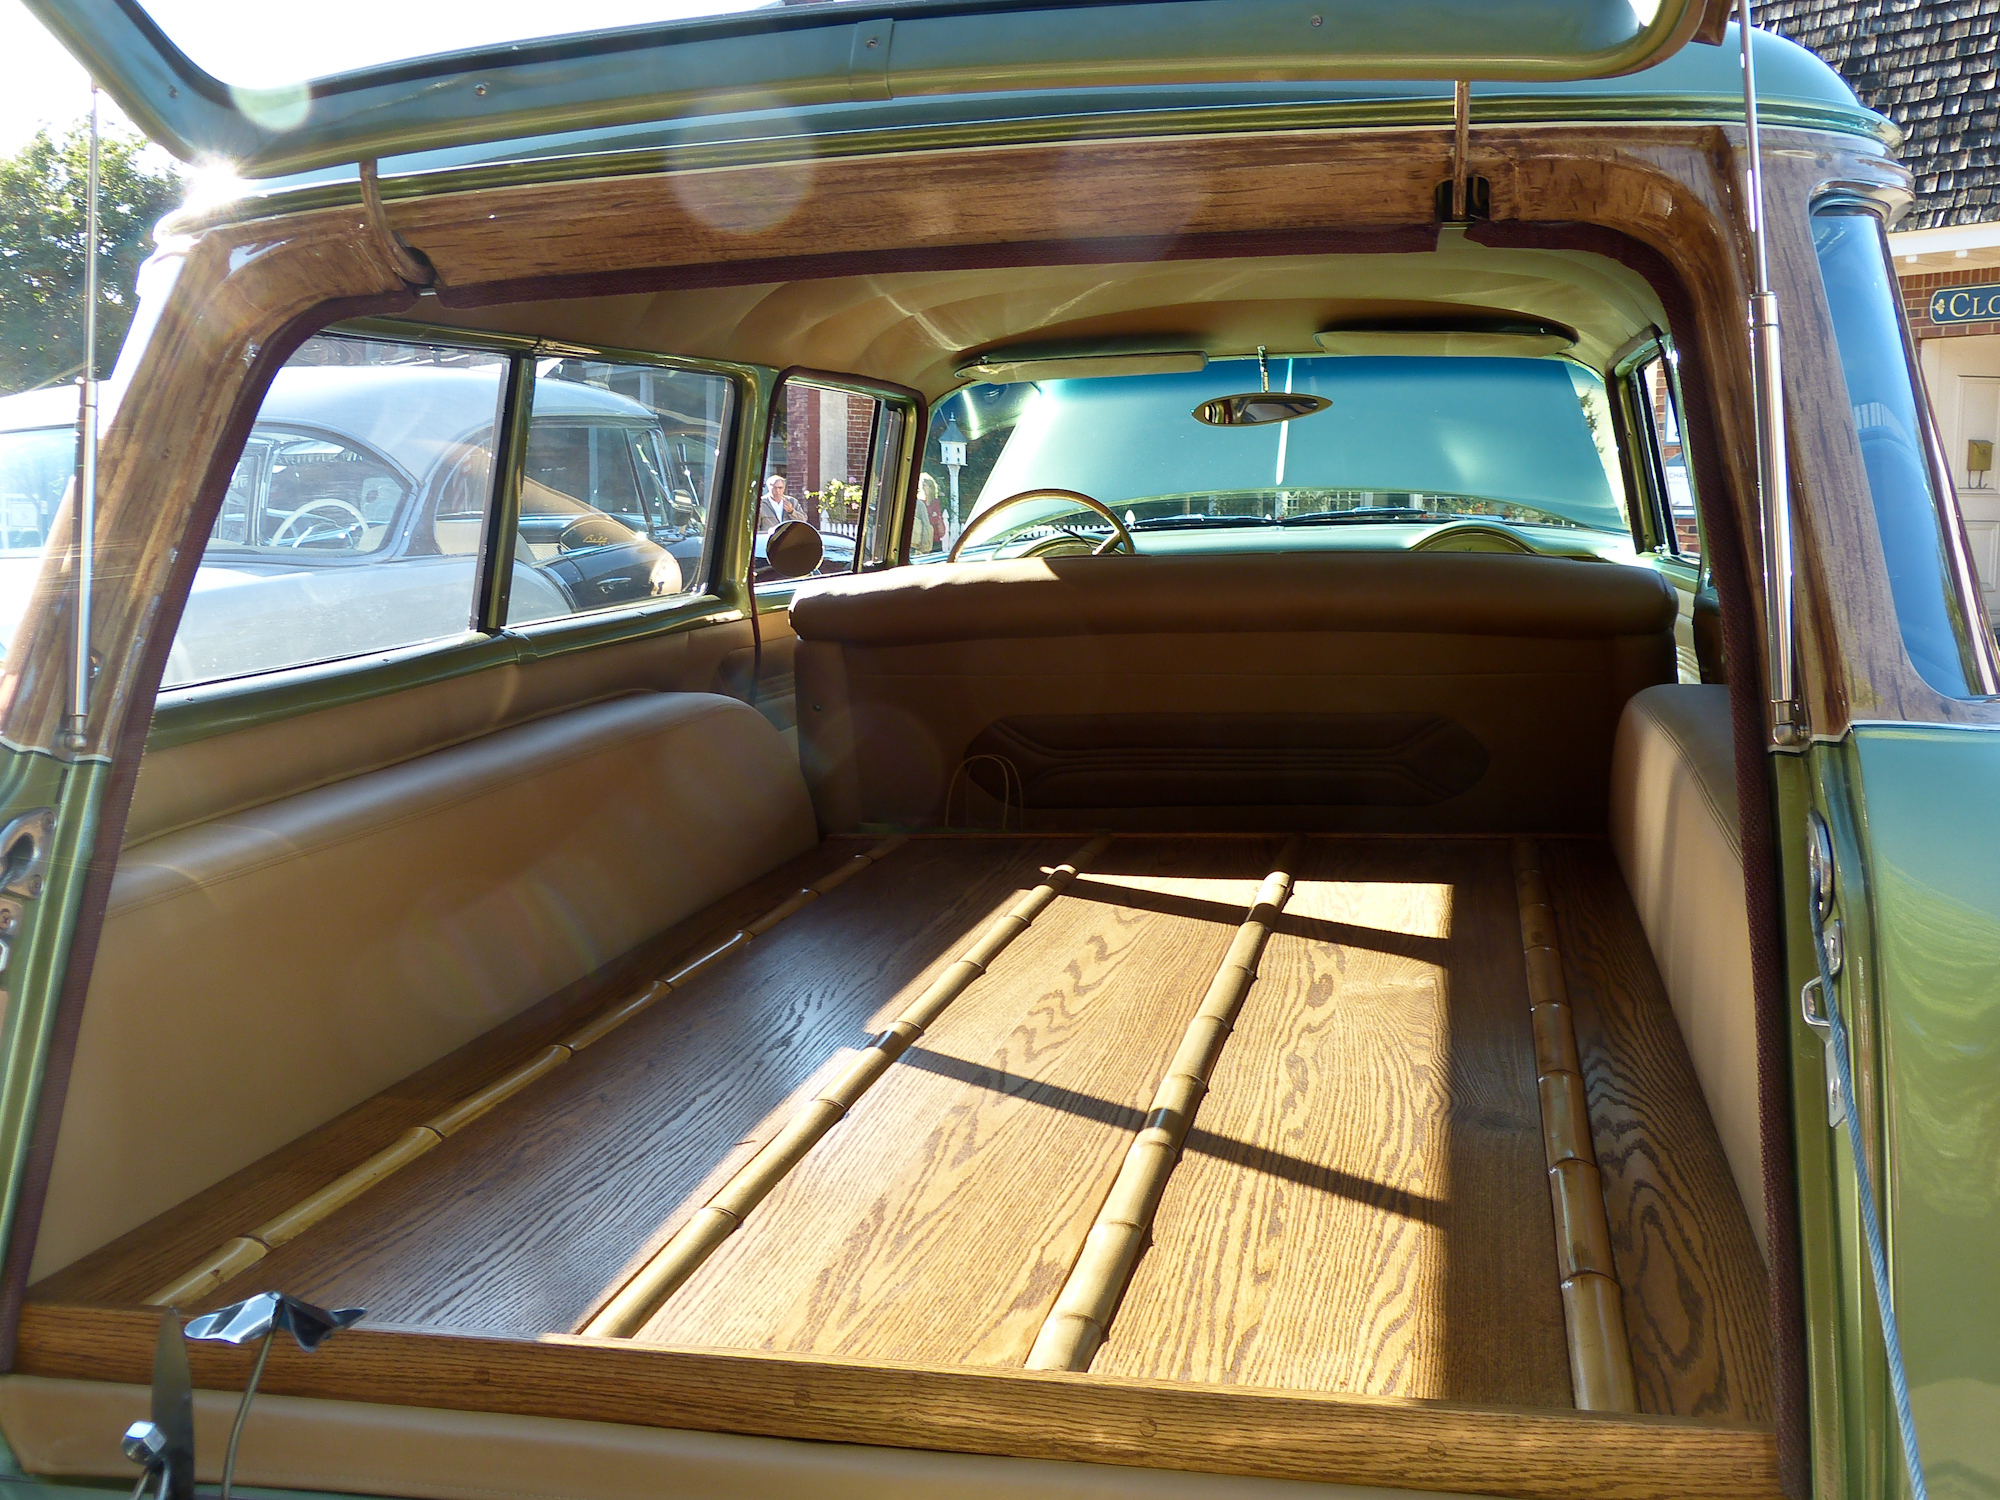 Chevy station wagon interior.jpg